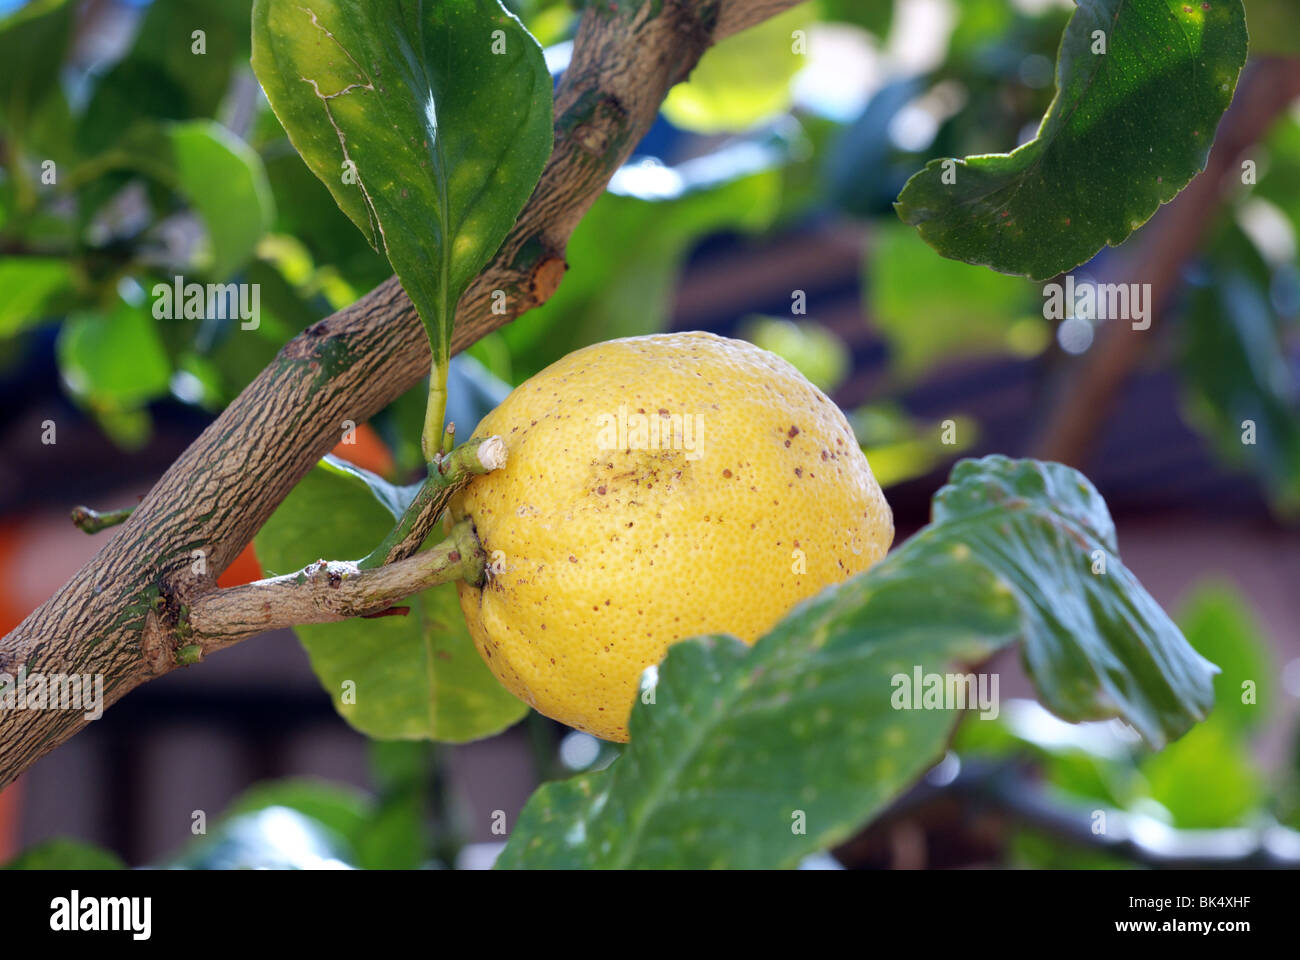 Organic lemon on tree Stock Photo